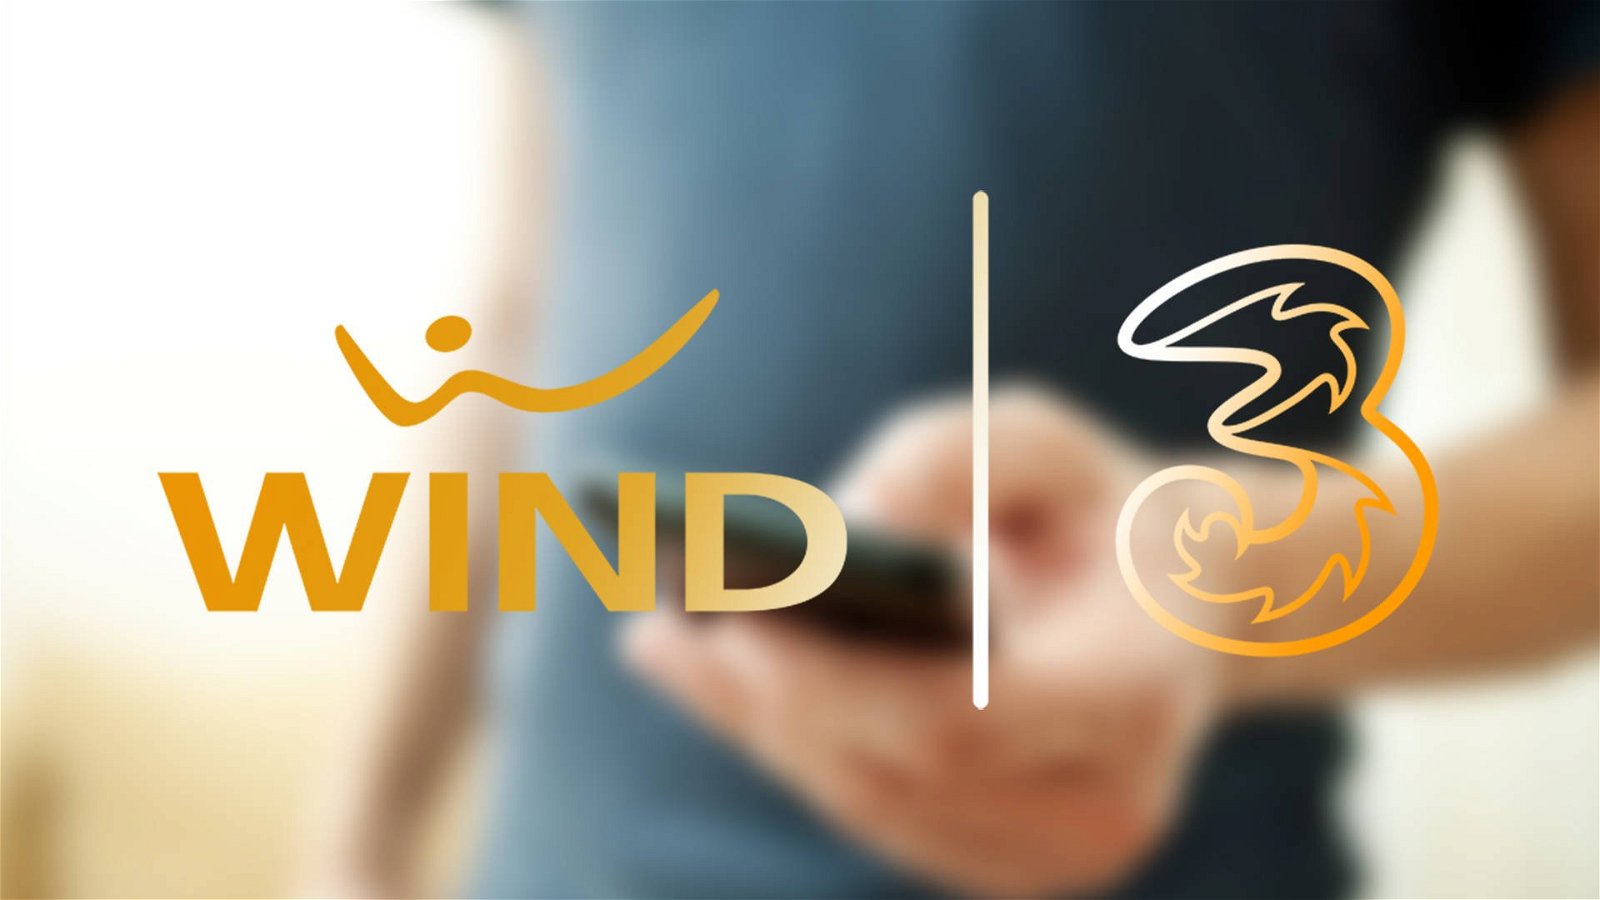 Immagine di WindTre, aumentano i costi di alcune offerte dei già clienti